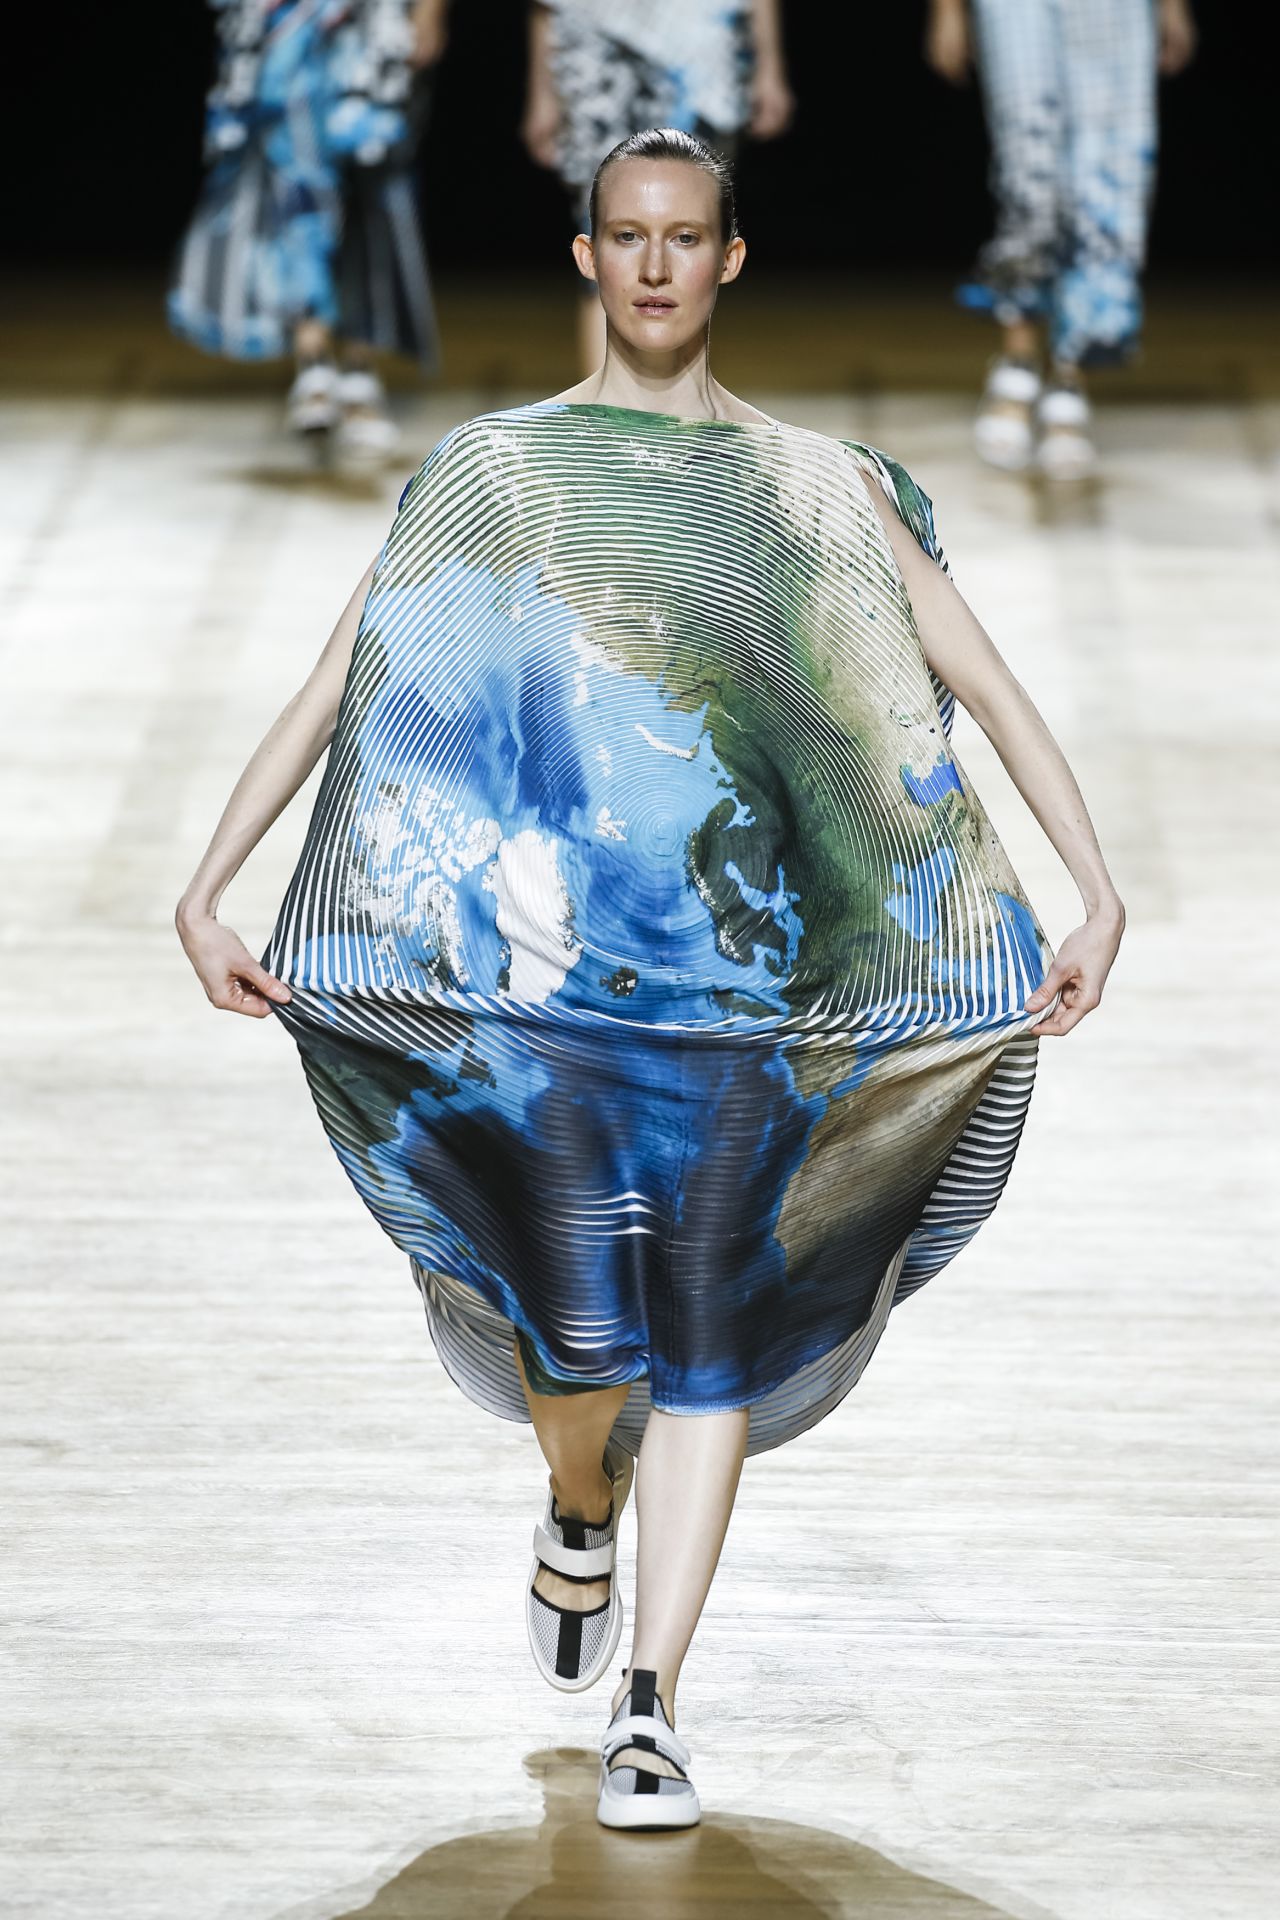 A model walks the runway for Issey Miyake at Paris Fashion Week's Spring-Summer 2018 edition.